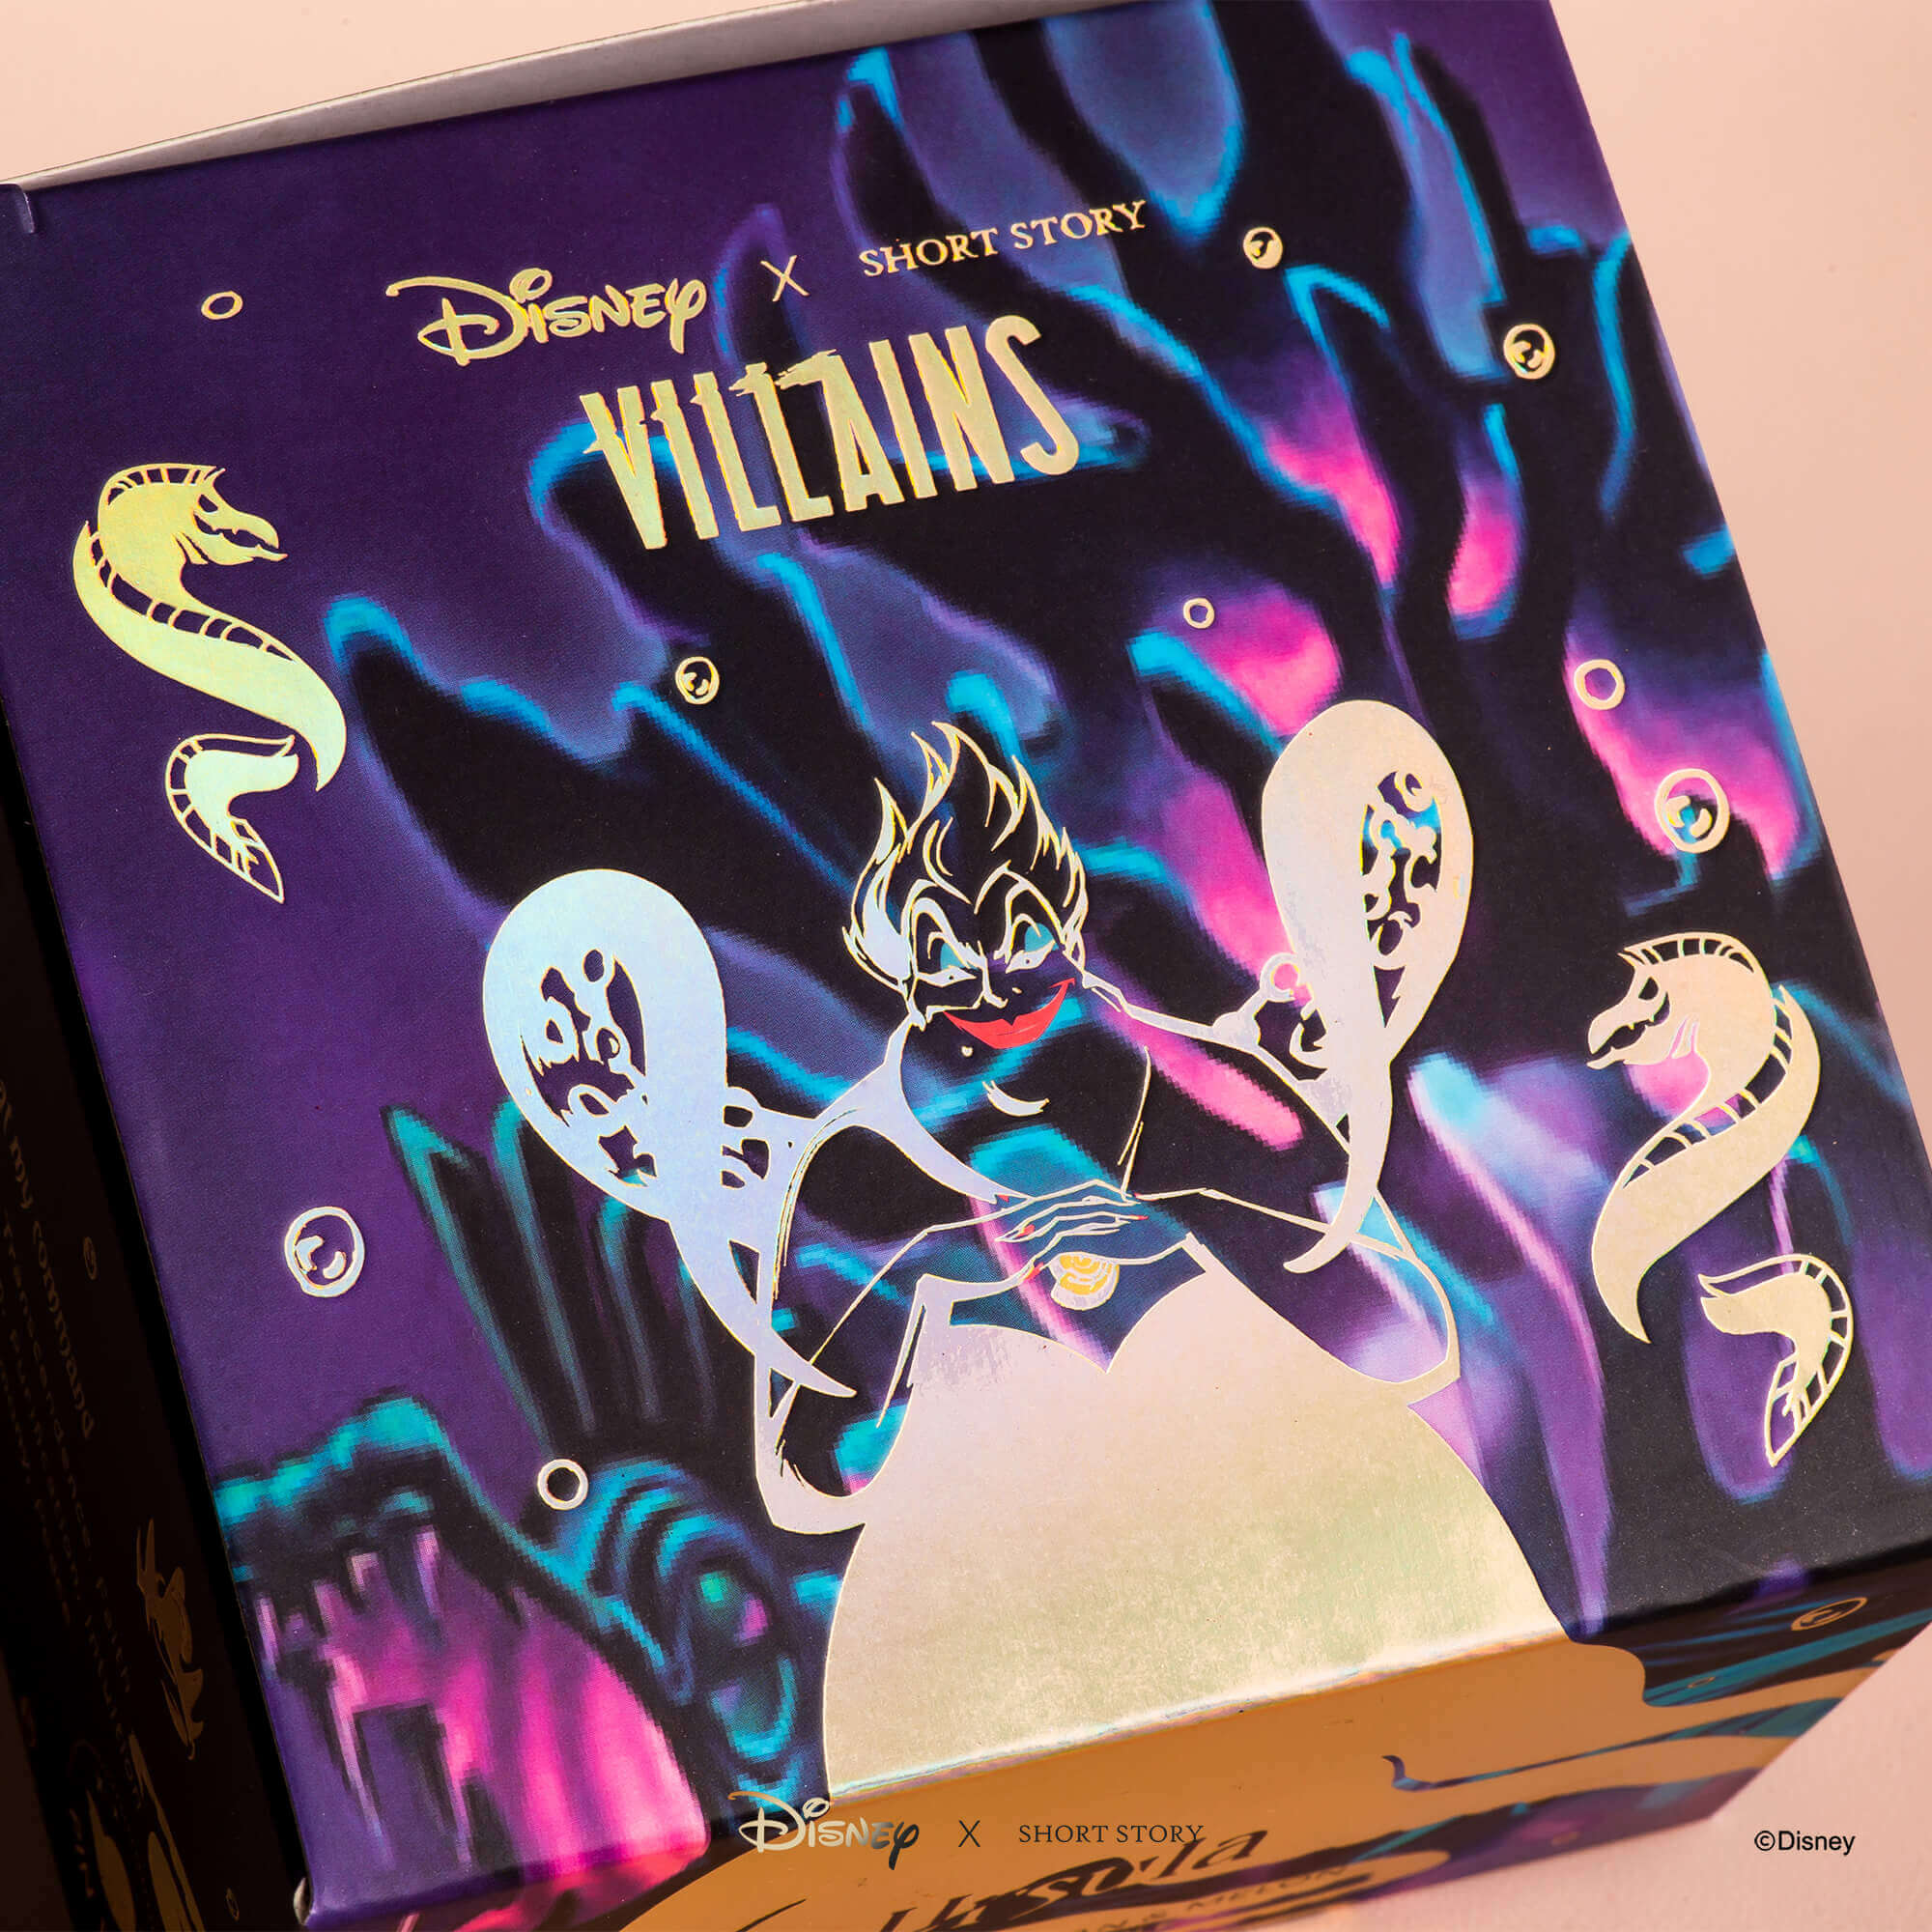 Disney Villains Ursula Collection Pack